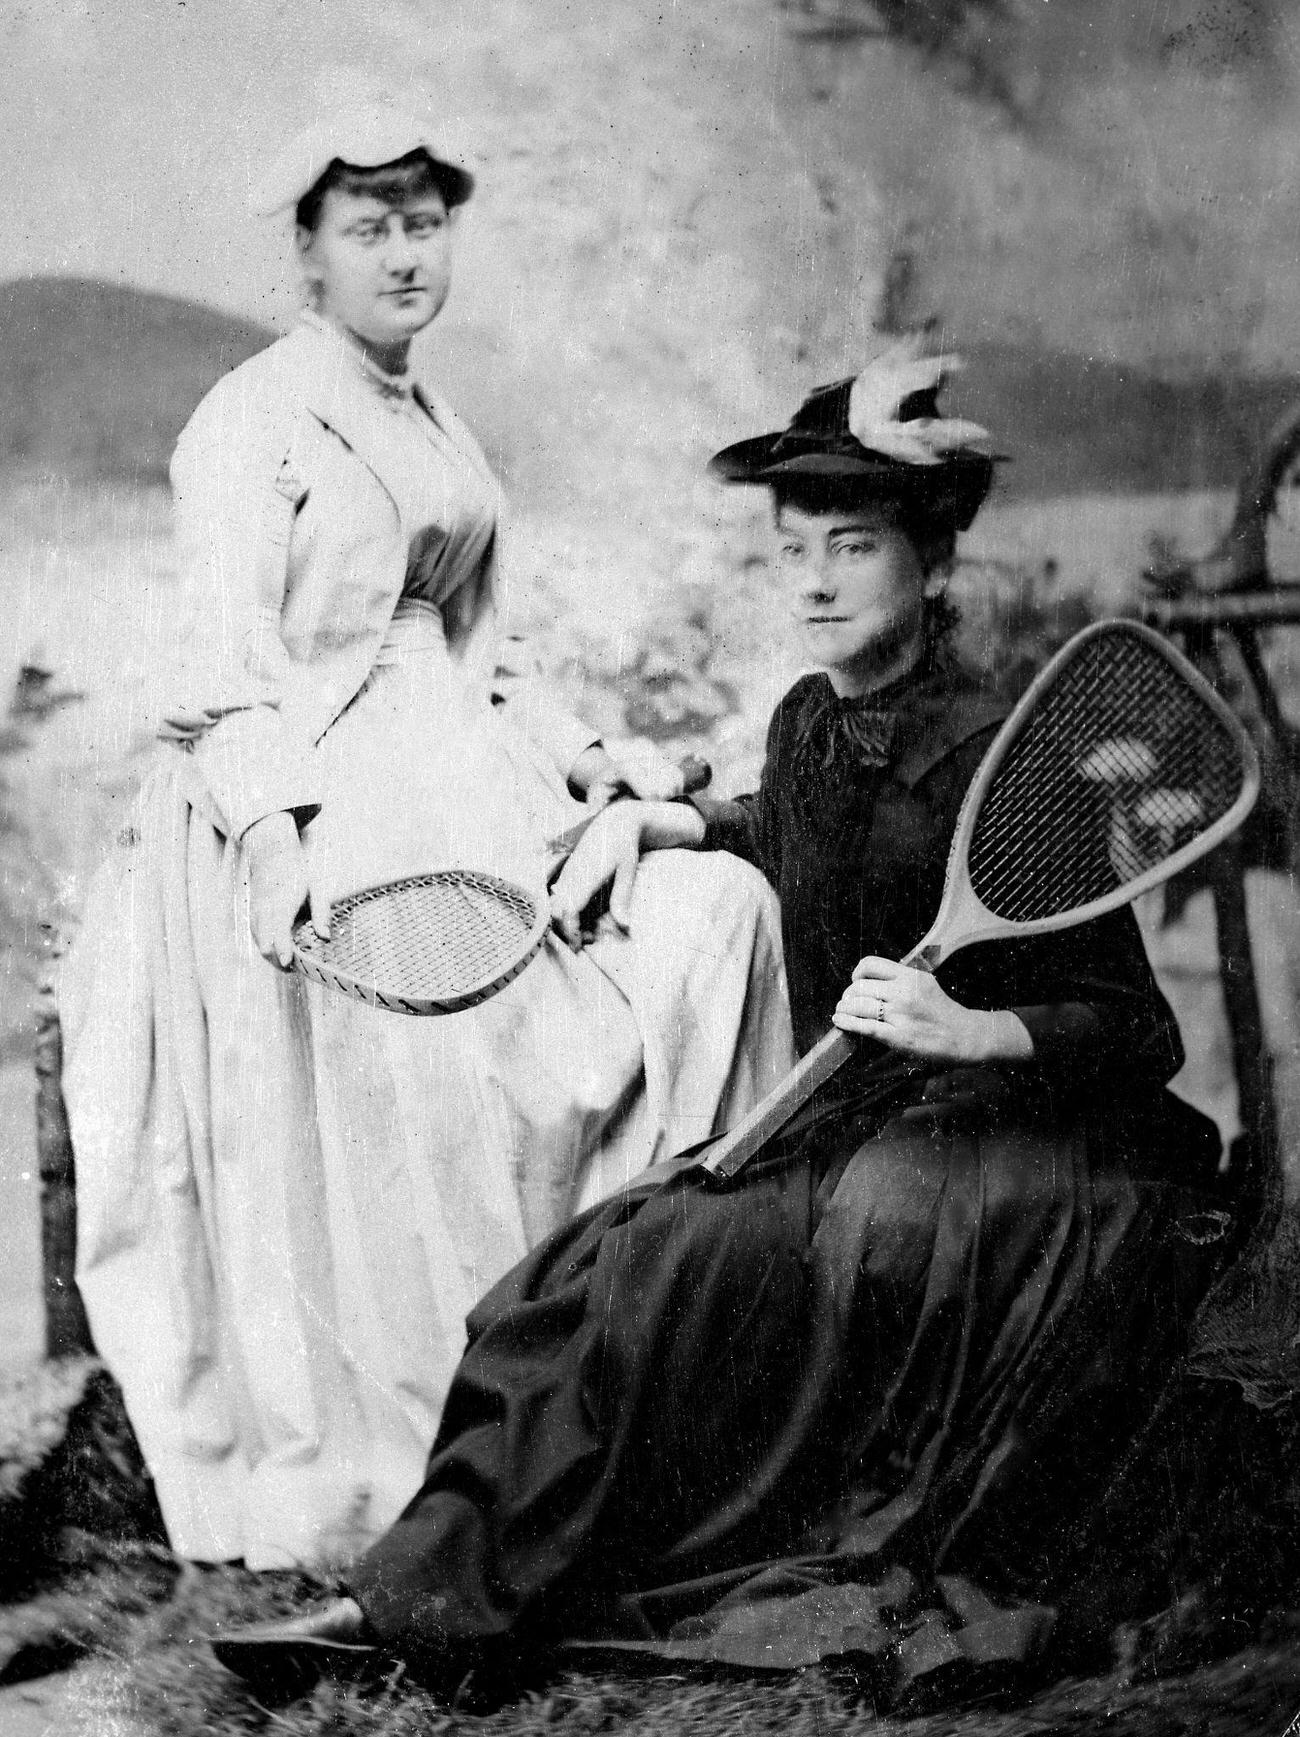 Two women posing with tennis racquets, circa 1890.